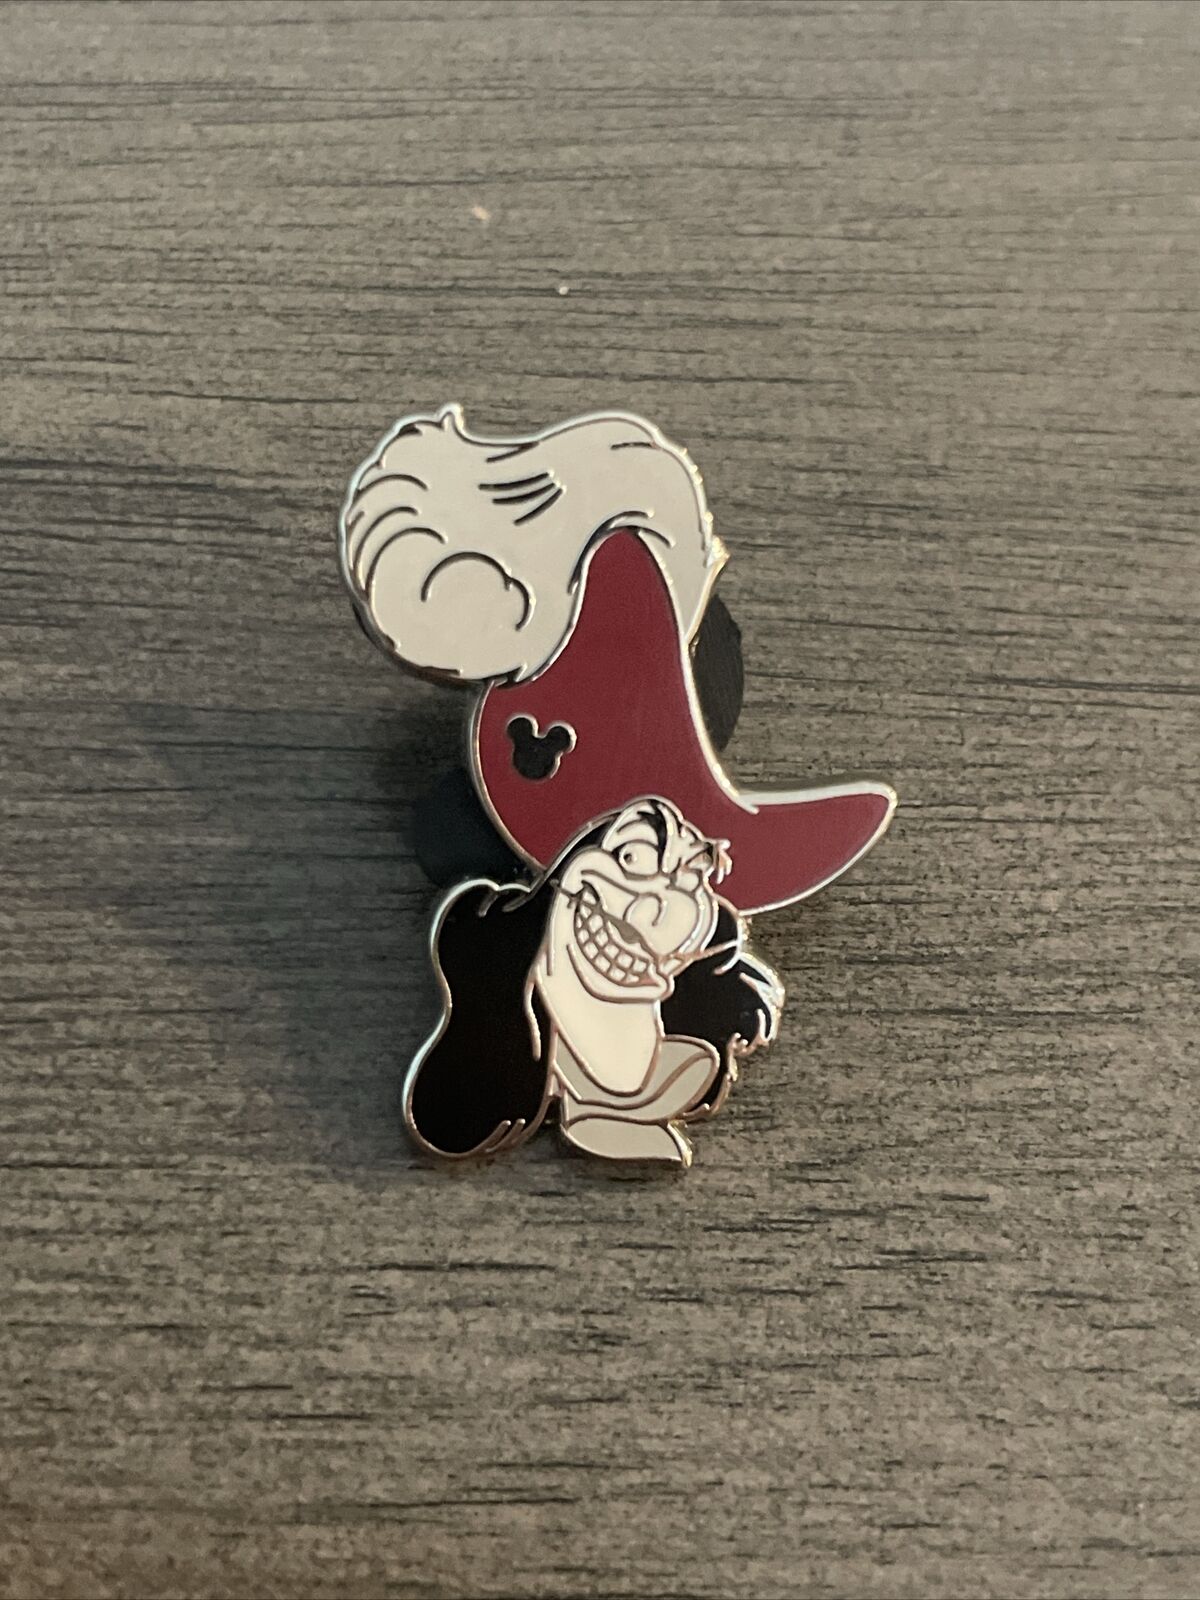 2019 Disney WDW Hidden Mickey Pin Peter Pan\'s Villain Pirate Captain Hook